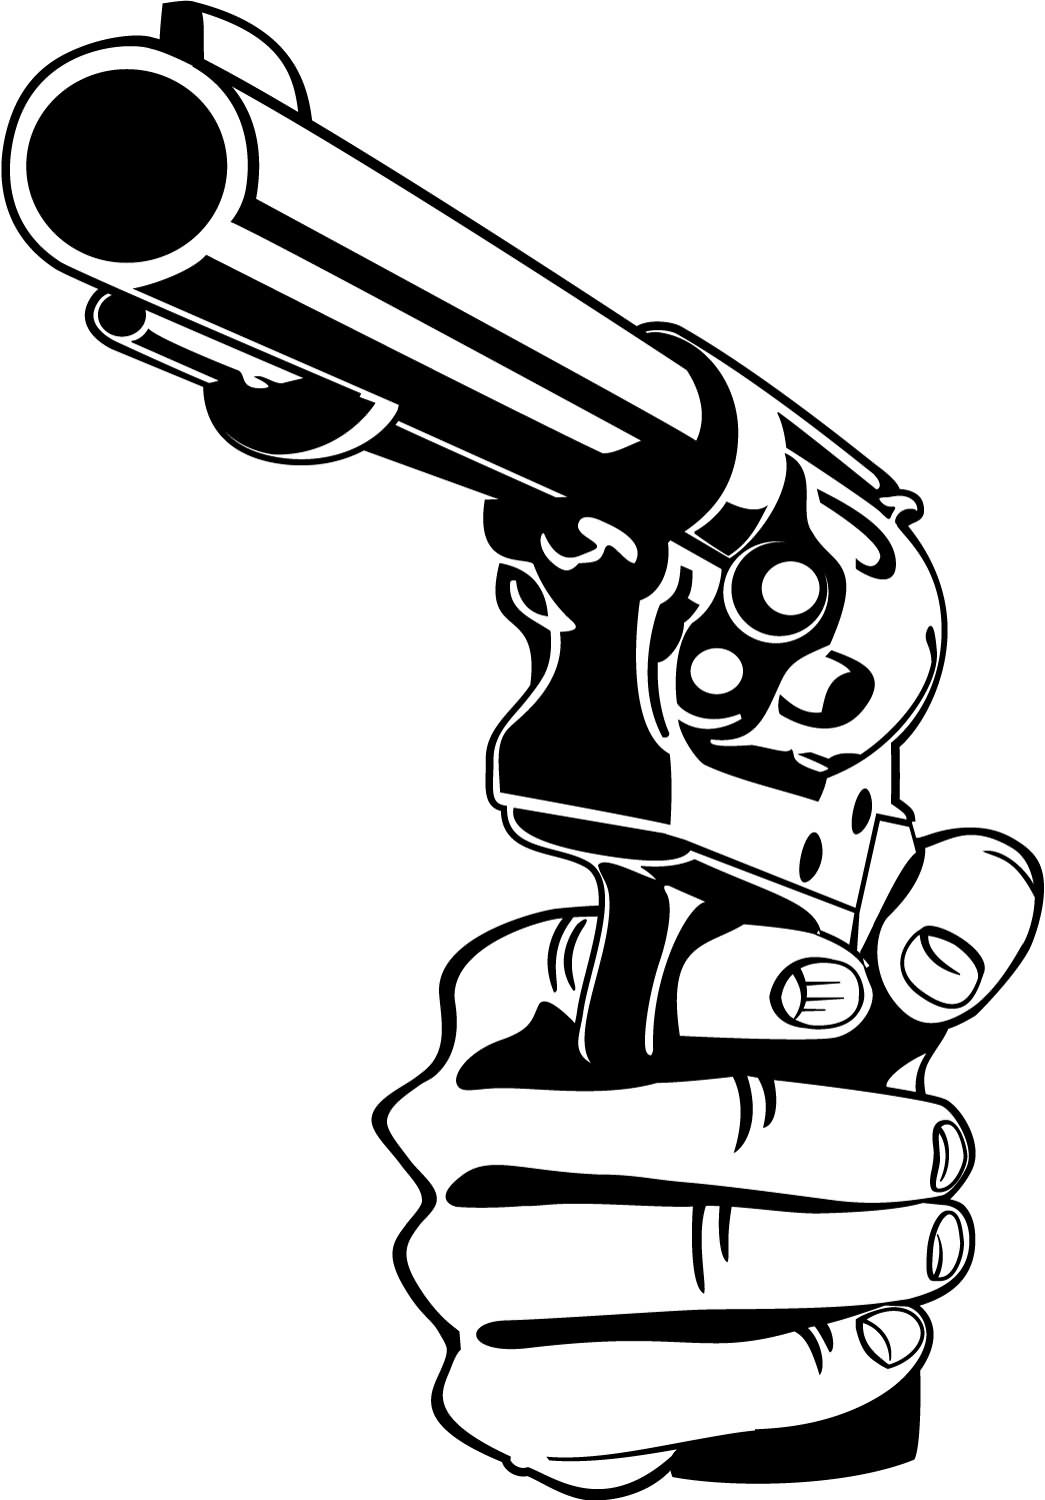 Download 14 Latest Gun Tattoo Designs And Ideas